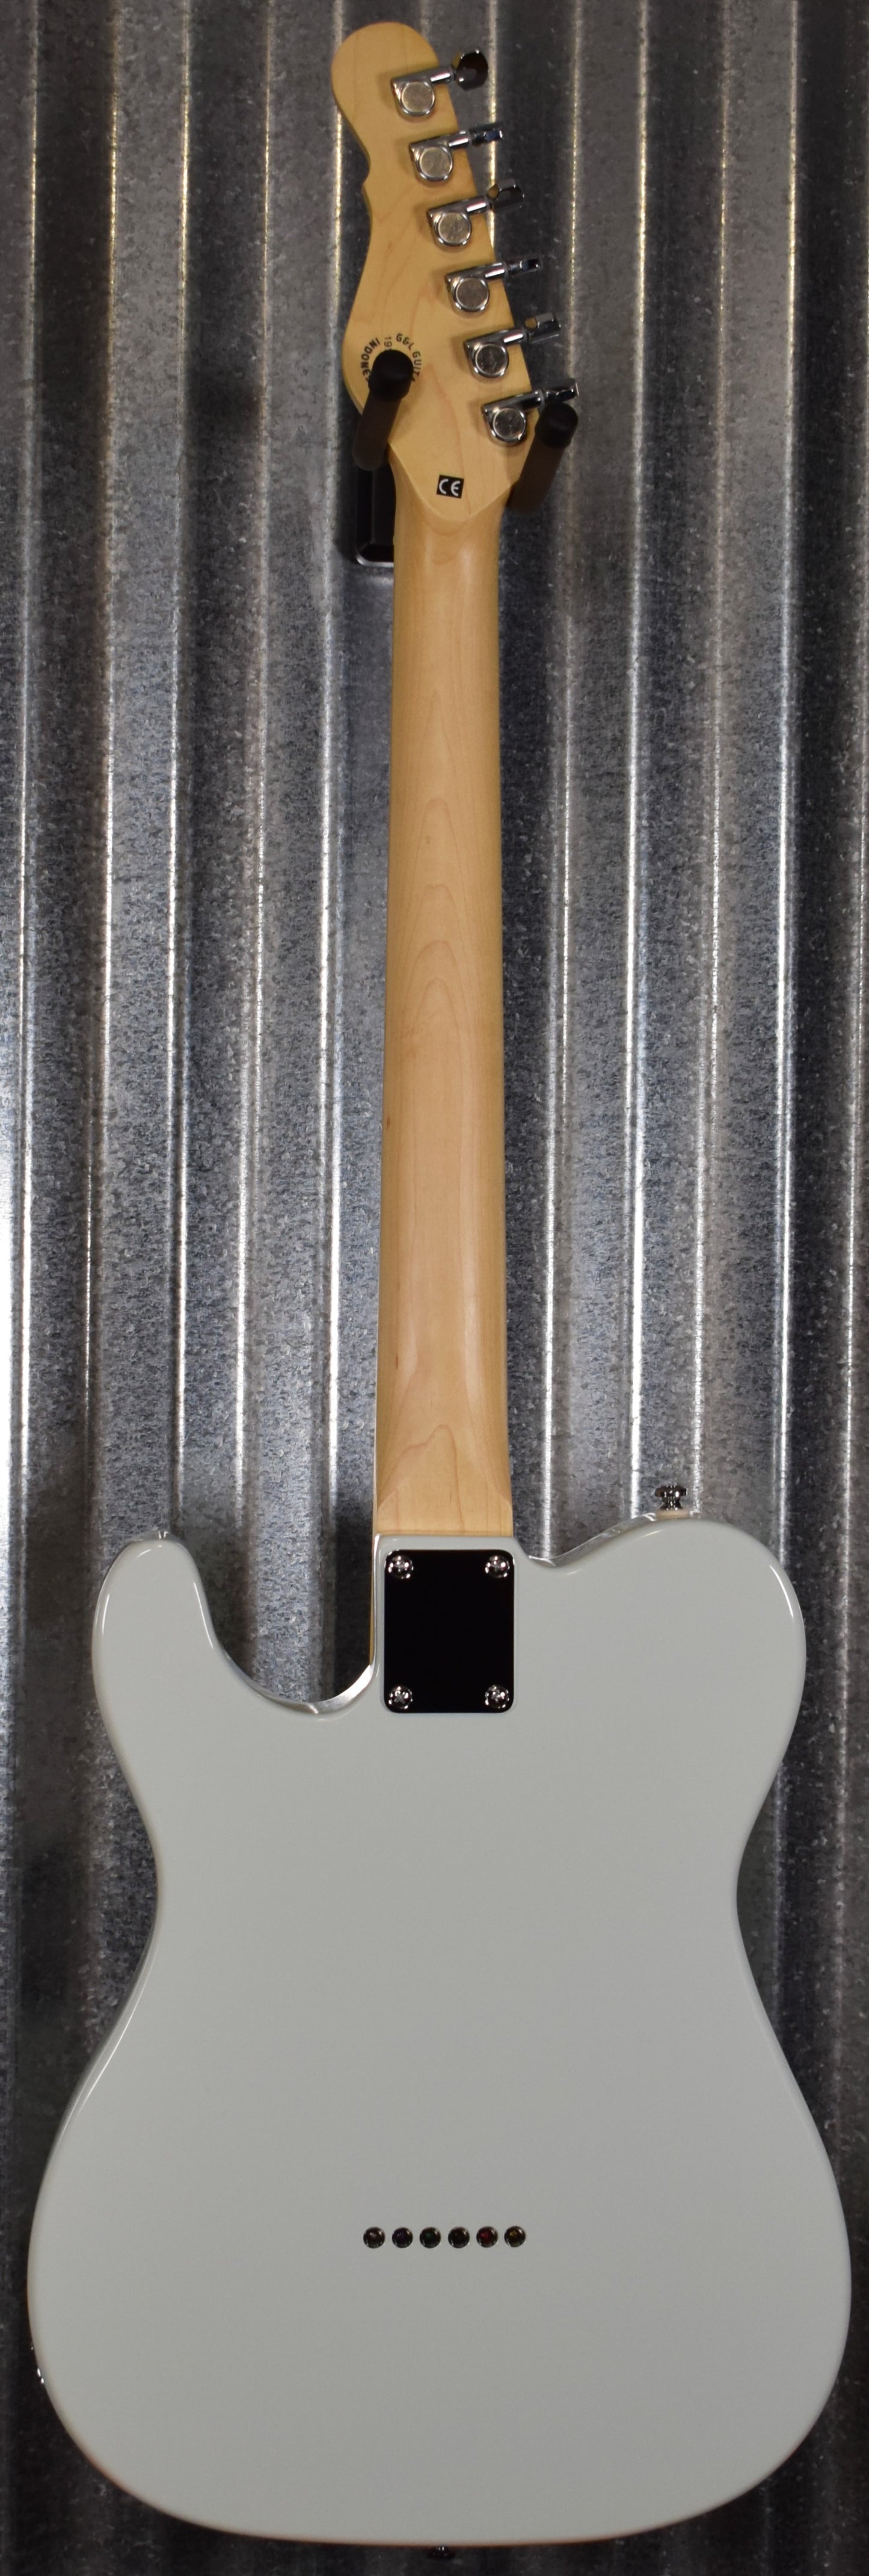 G&L Tribute ASAT Classic Sonic Blue Poplar Guitar #3384 Demo